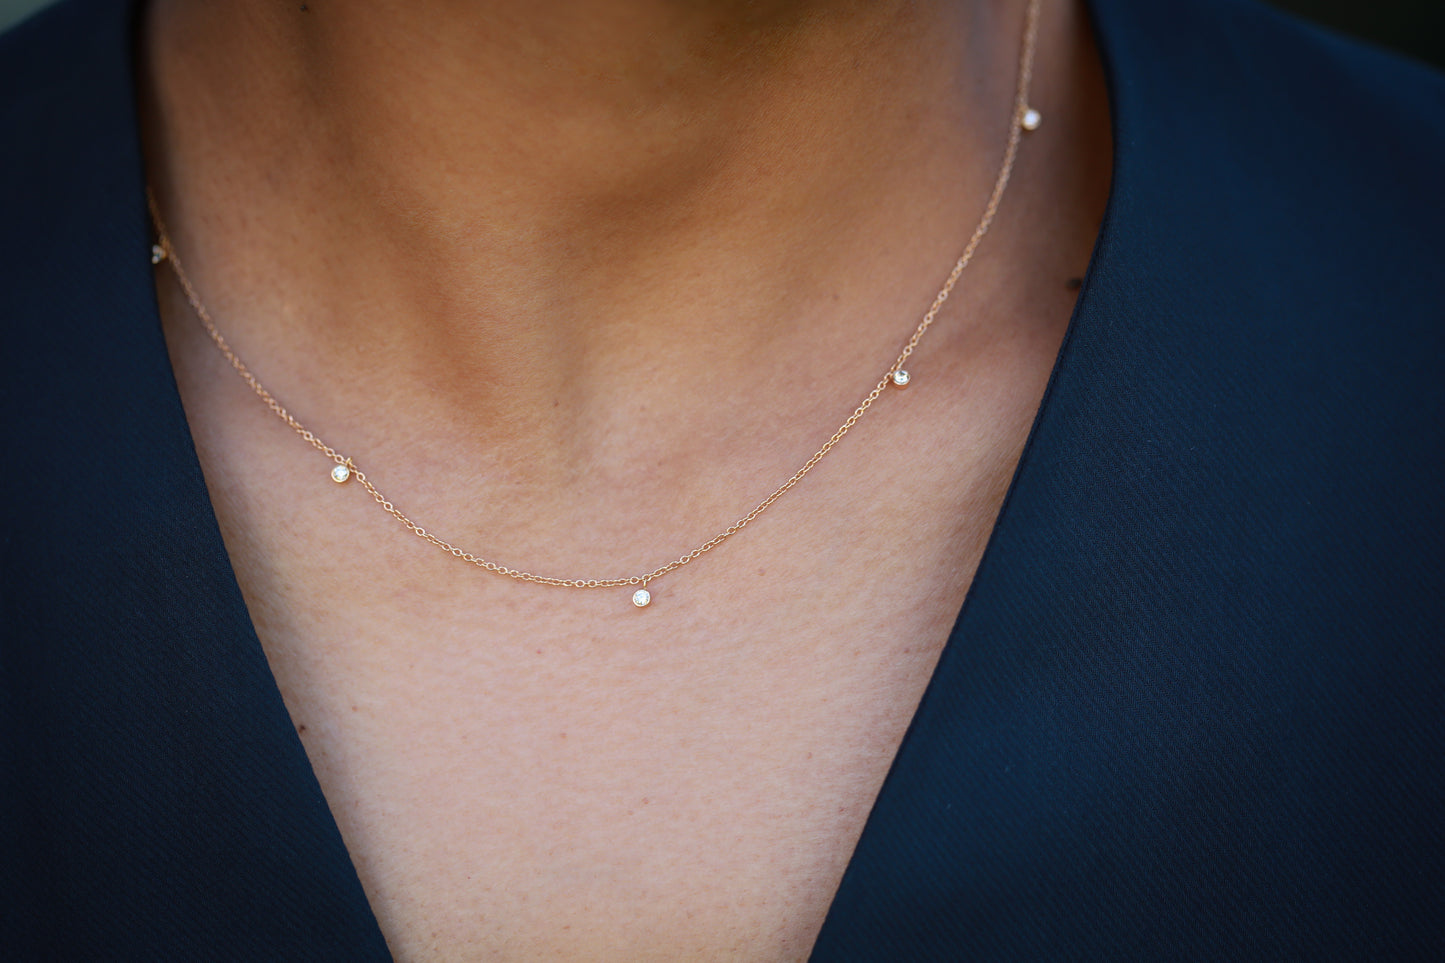 Stardust necklace